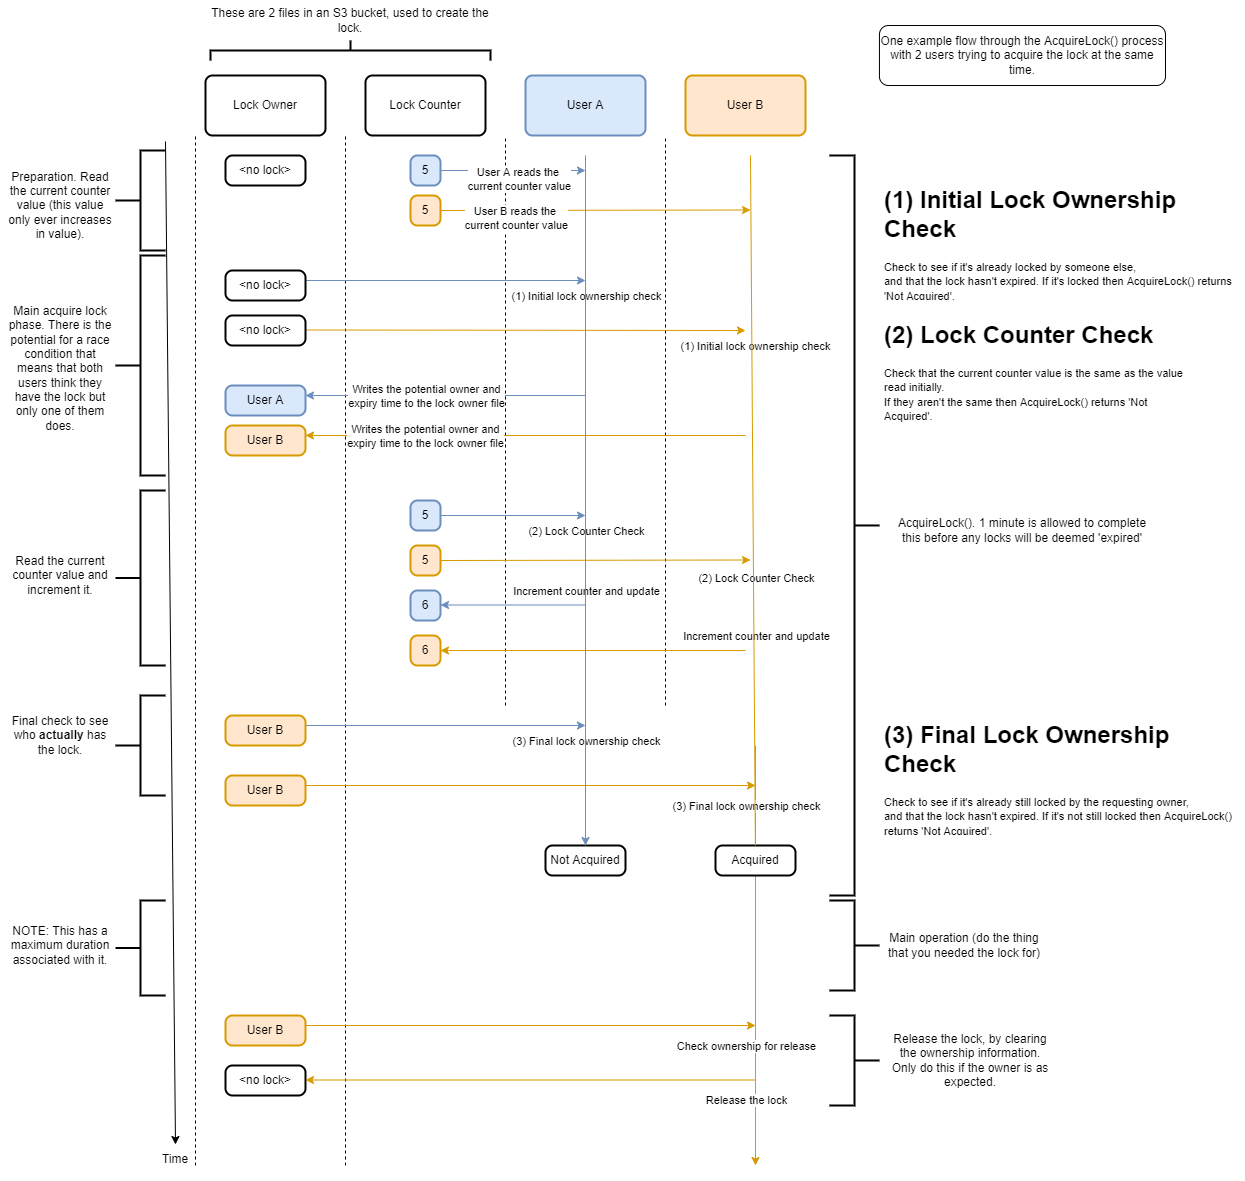 Exampe workflow